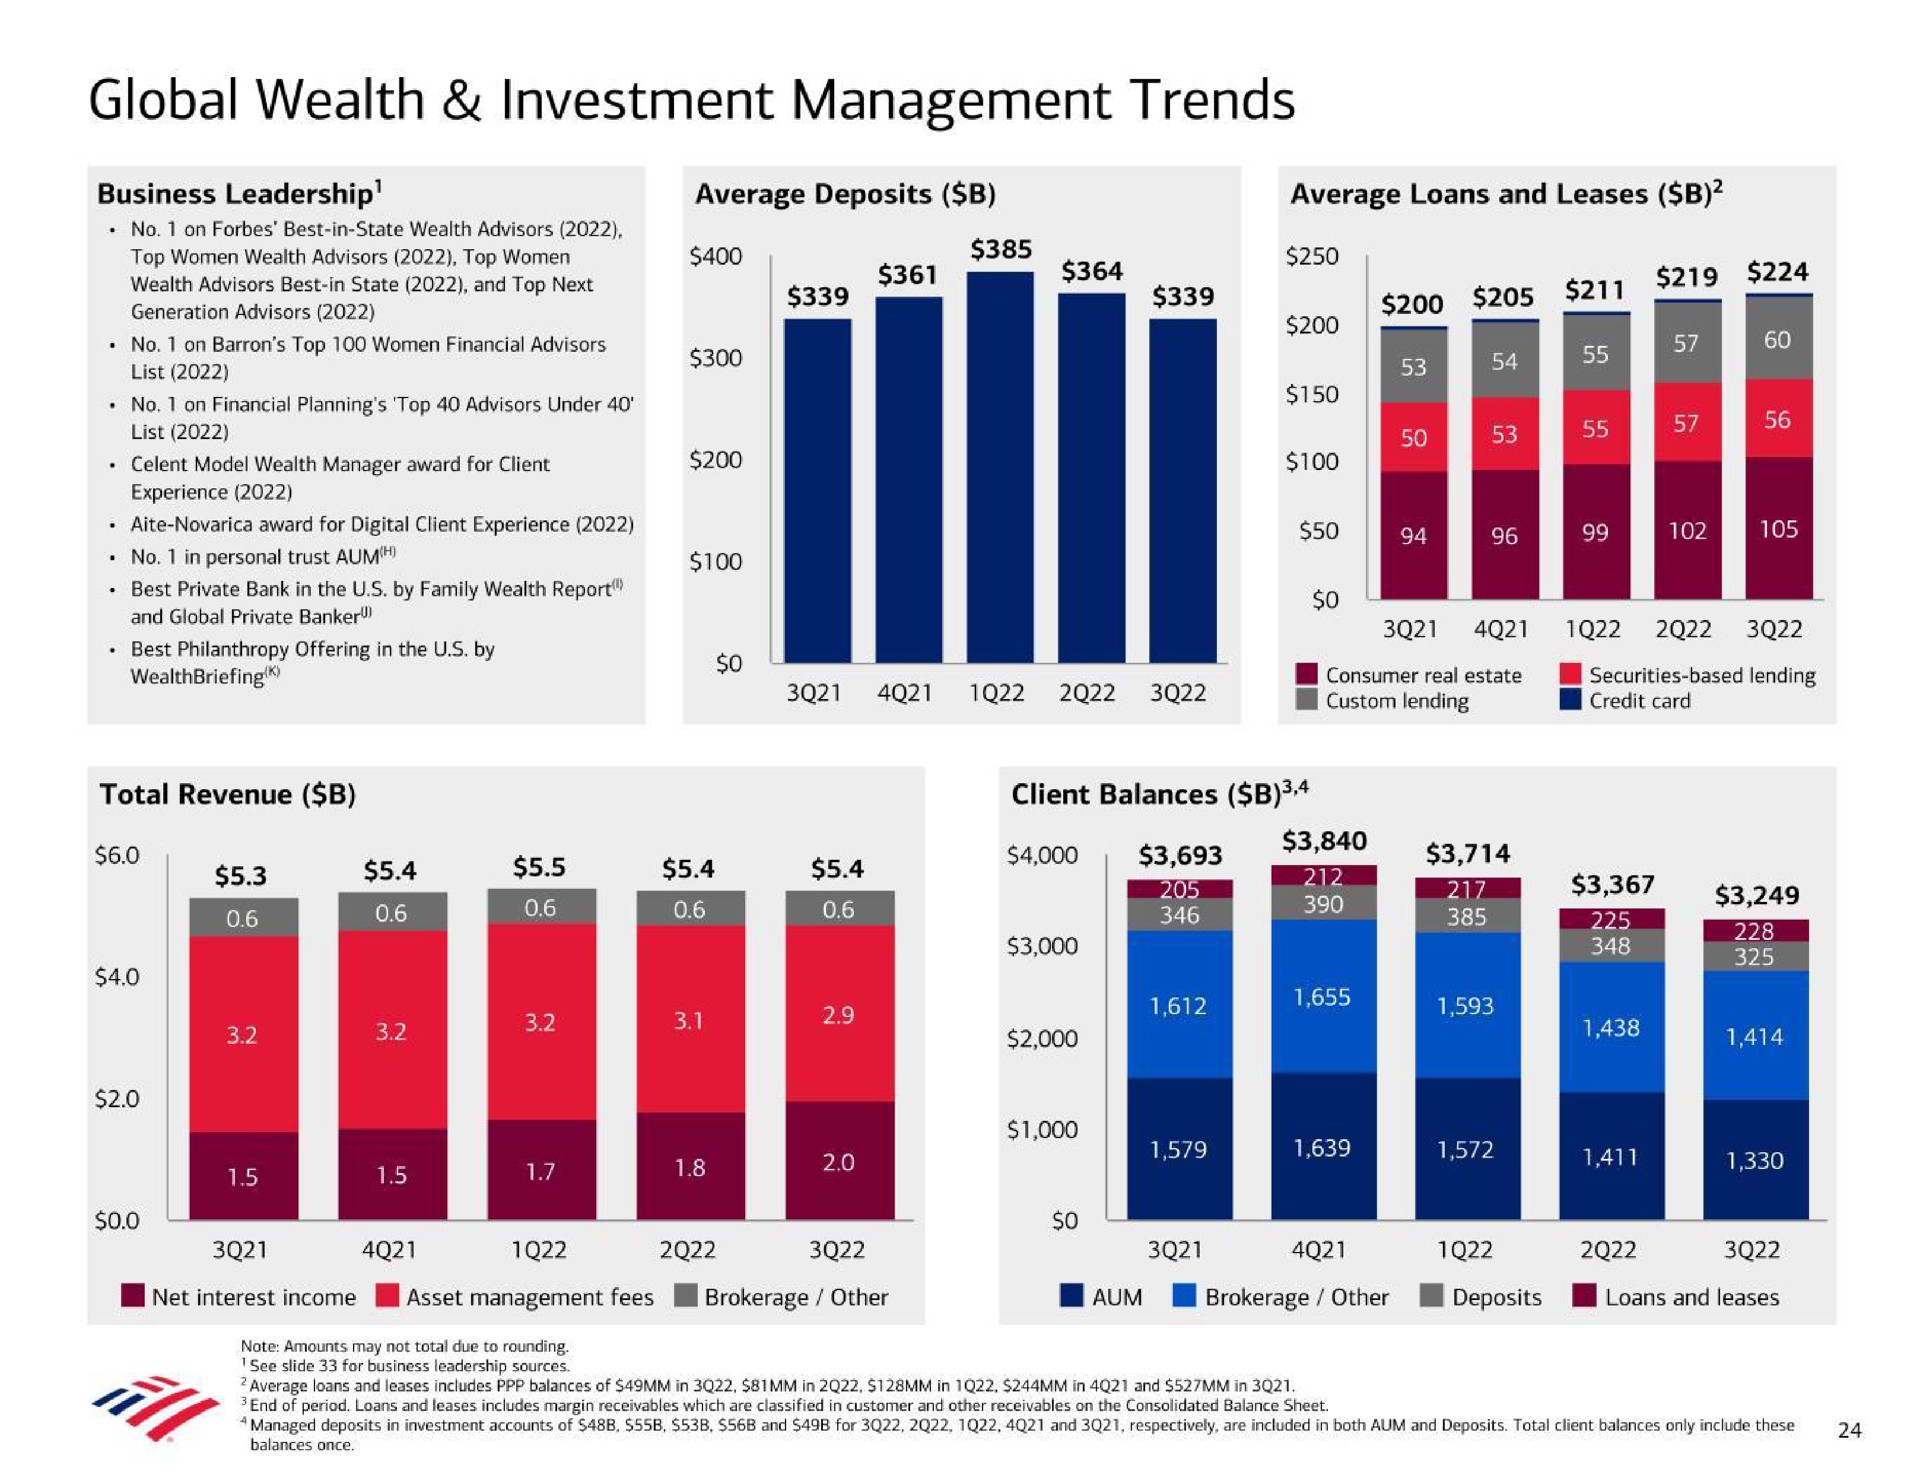 global wealth investment management trends list list total revenue client balances | Bank of America